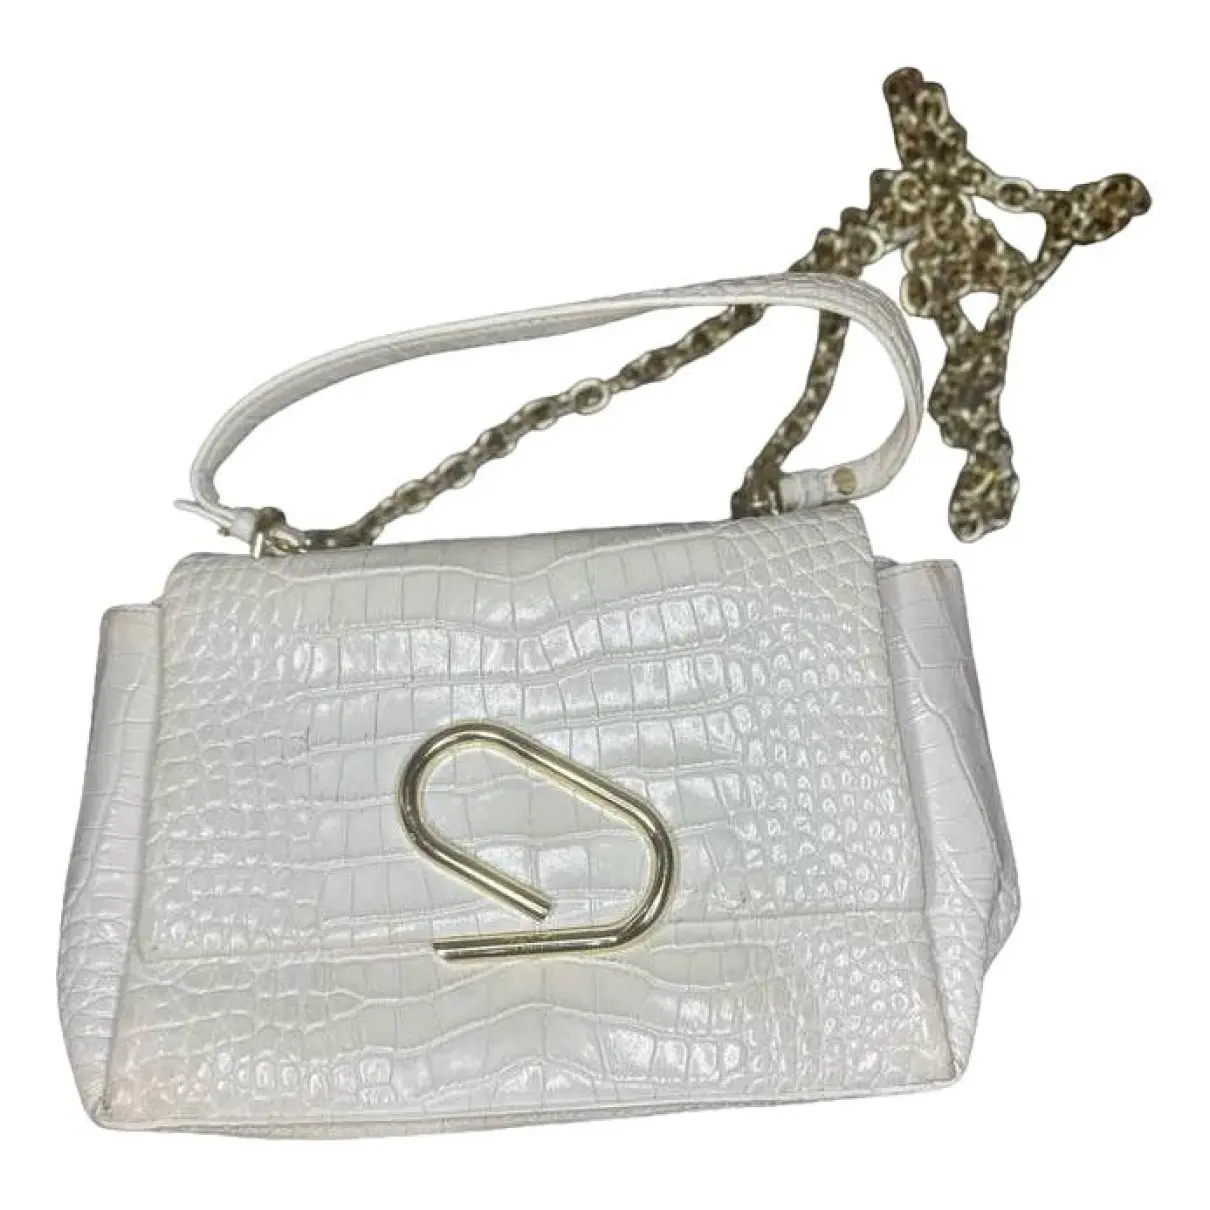 Exotic leathers handbag 3.1 Phillip Lim